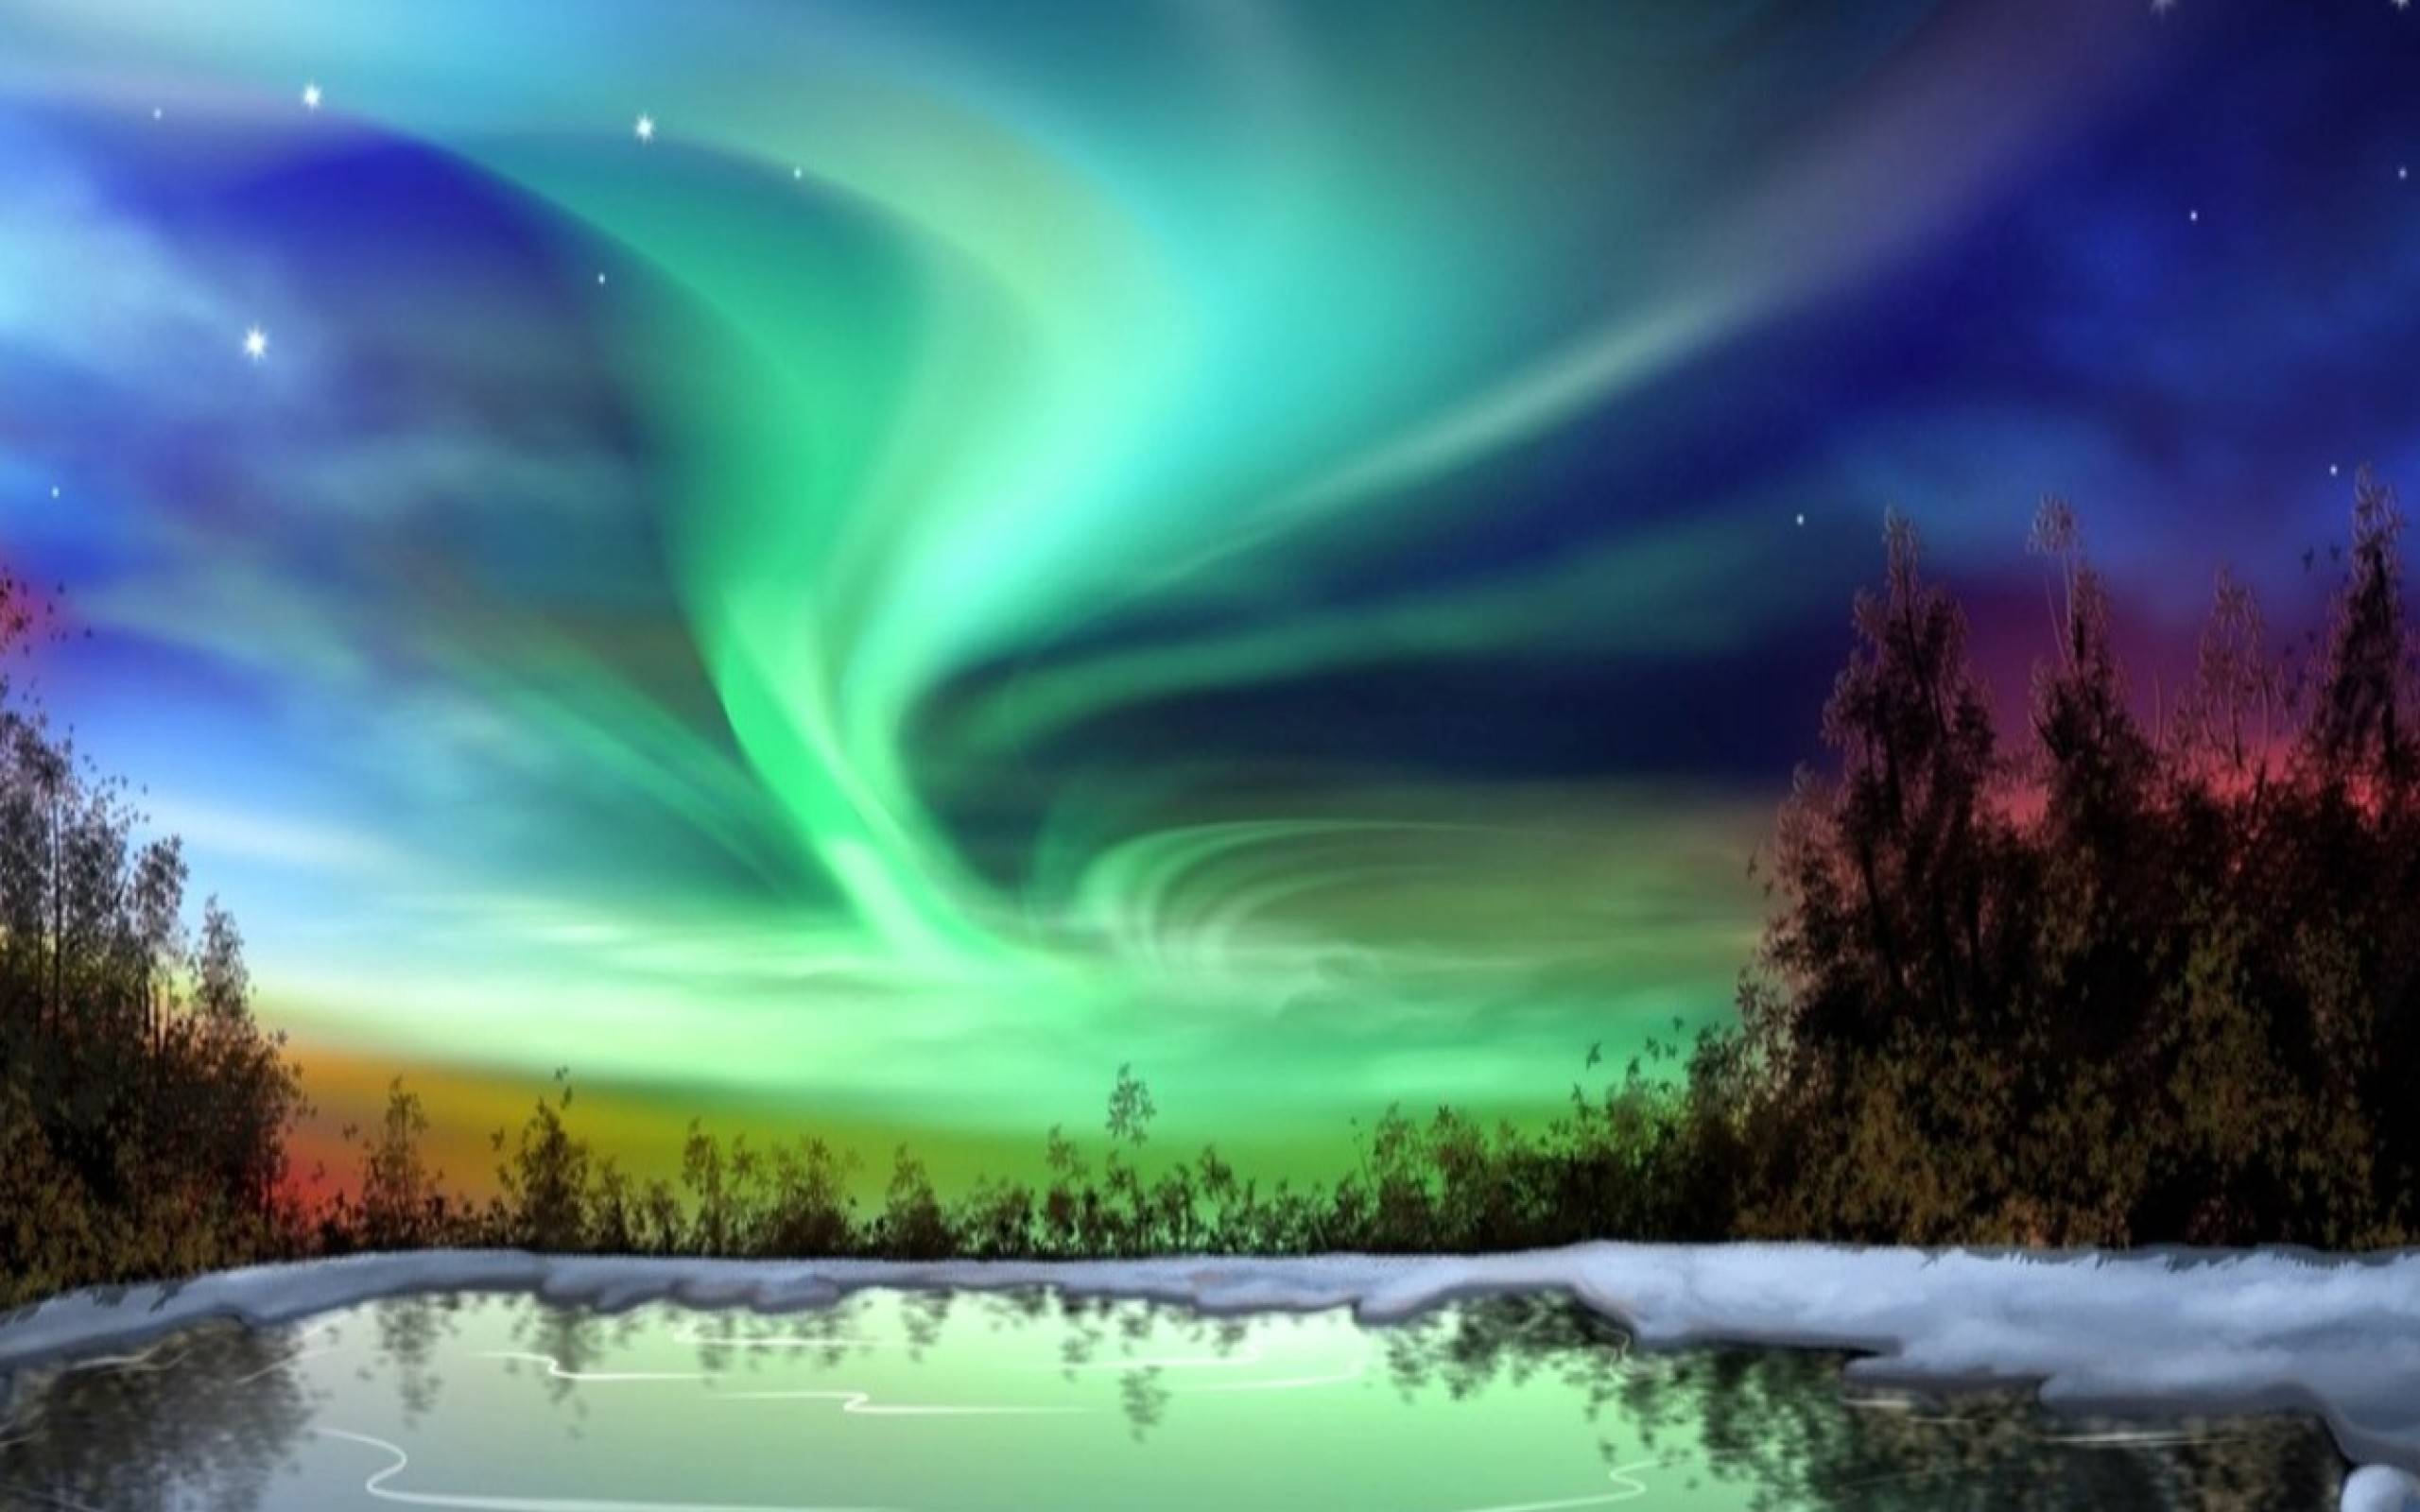 More Image Wallpaper Celestial Aurora Borealis Northern Lights Tweet